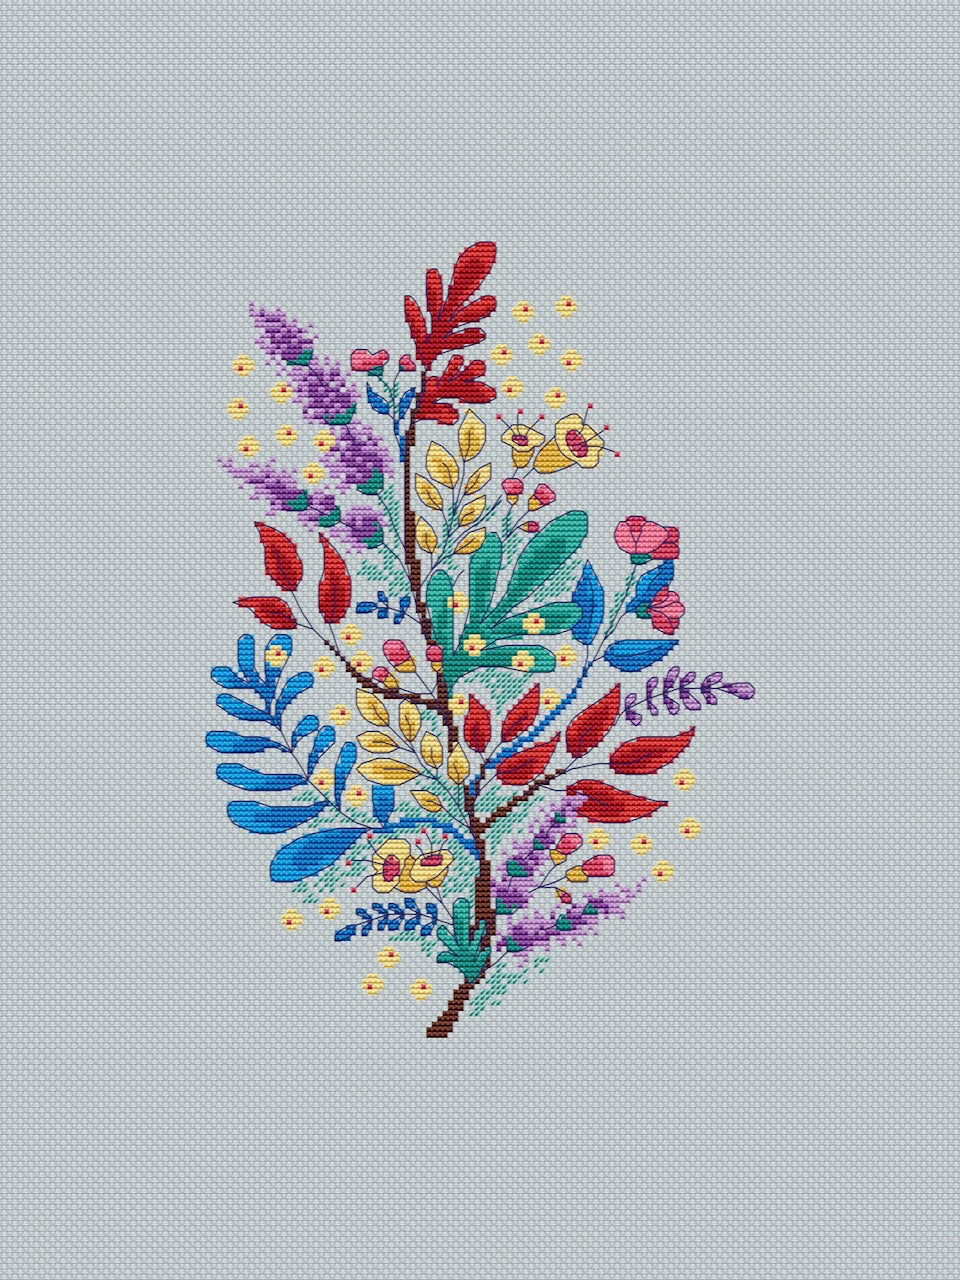 Colorful Dream - cross stitch pattern